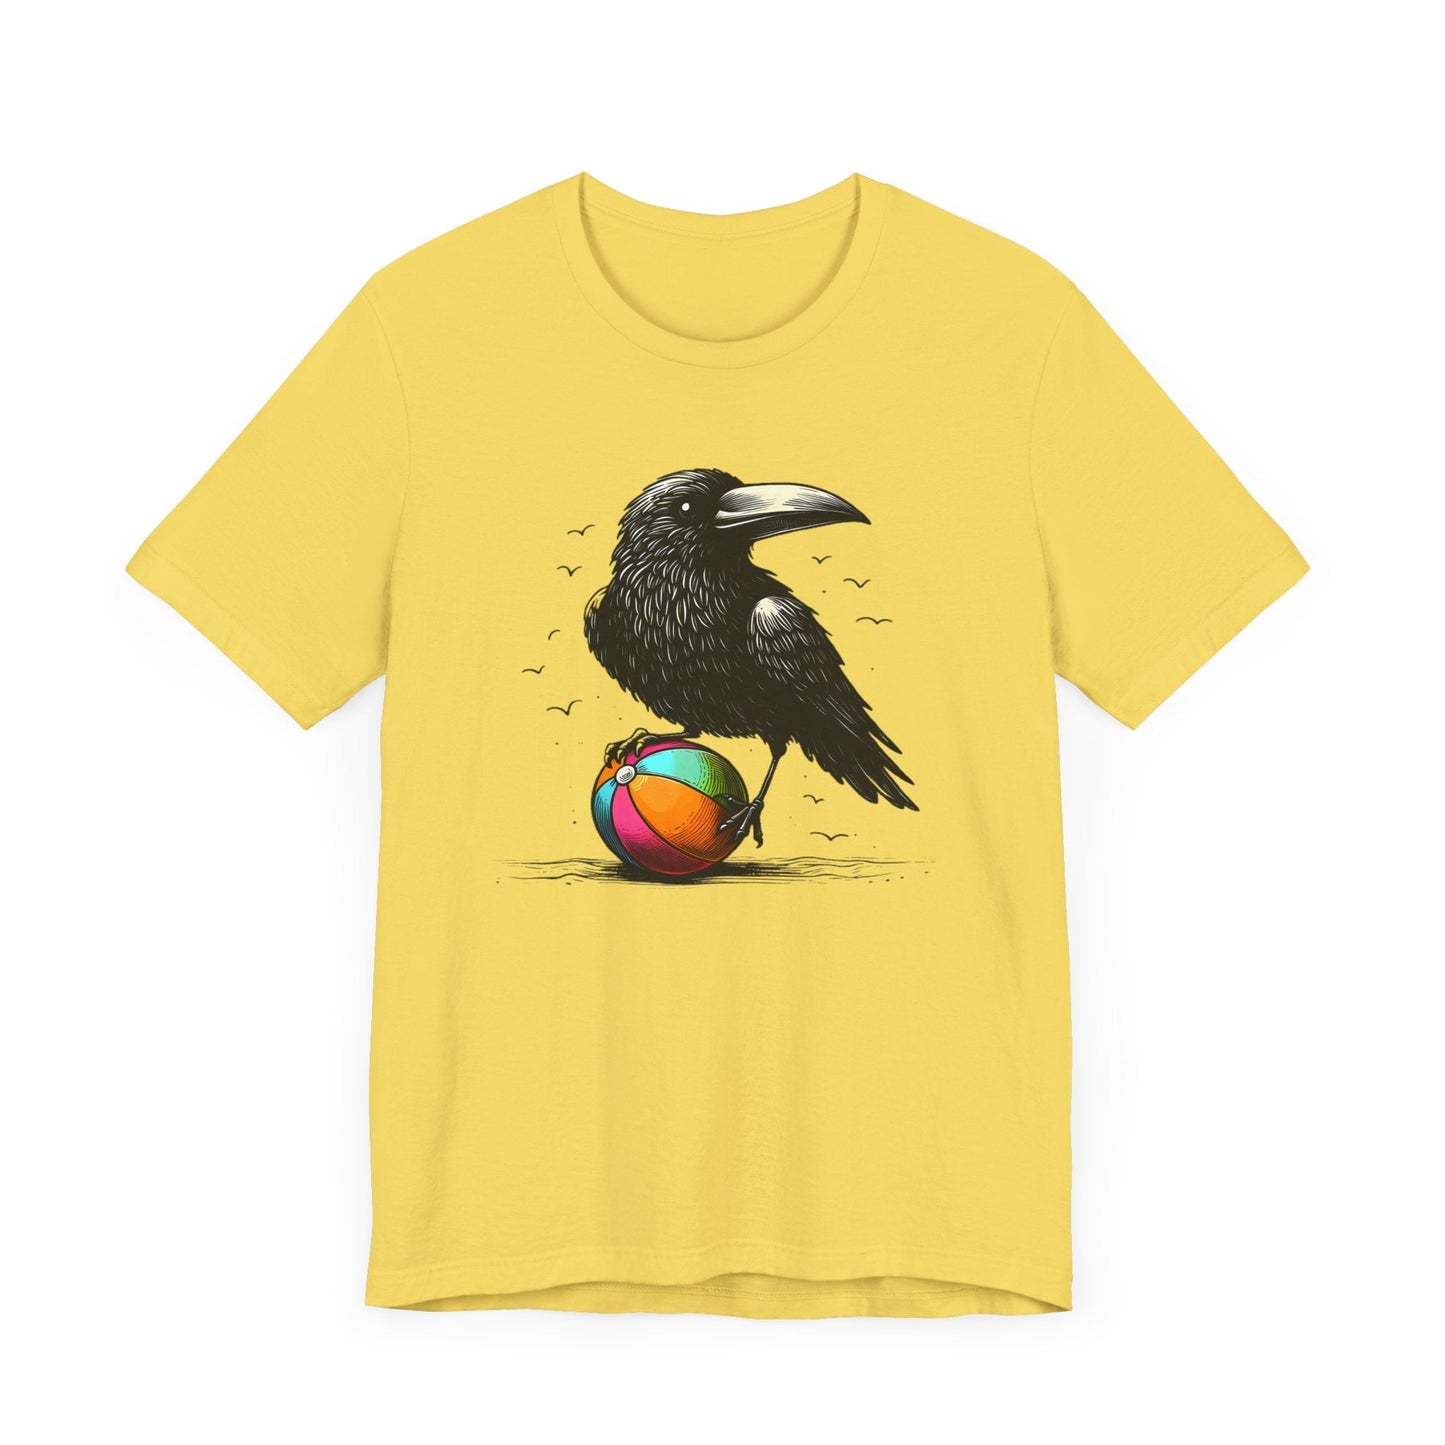 Raven On Beach Ball Short Sleeve Tee ShirtT - ShirtVTZdesignsMaize YellowXSCottonCrew neckcrow